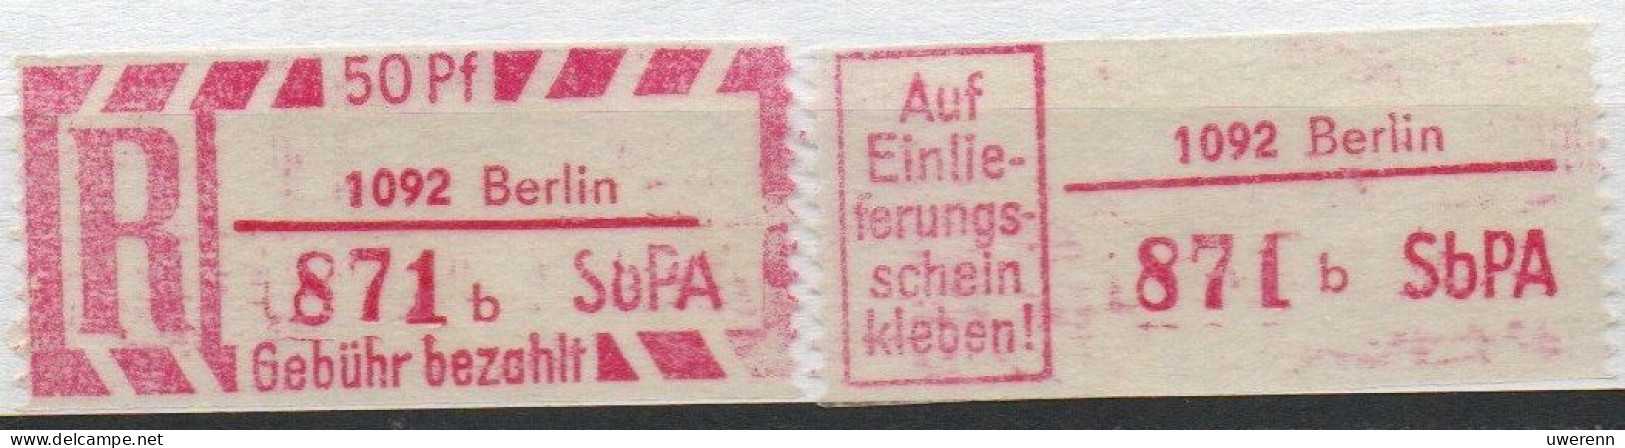 DDR Einschreibemarke Berlin SbPA Postfrisch, EM2B-1092bI(2) Gt - R-Zettel